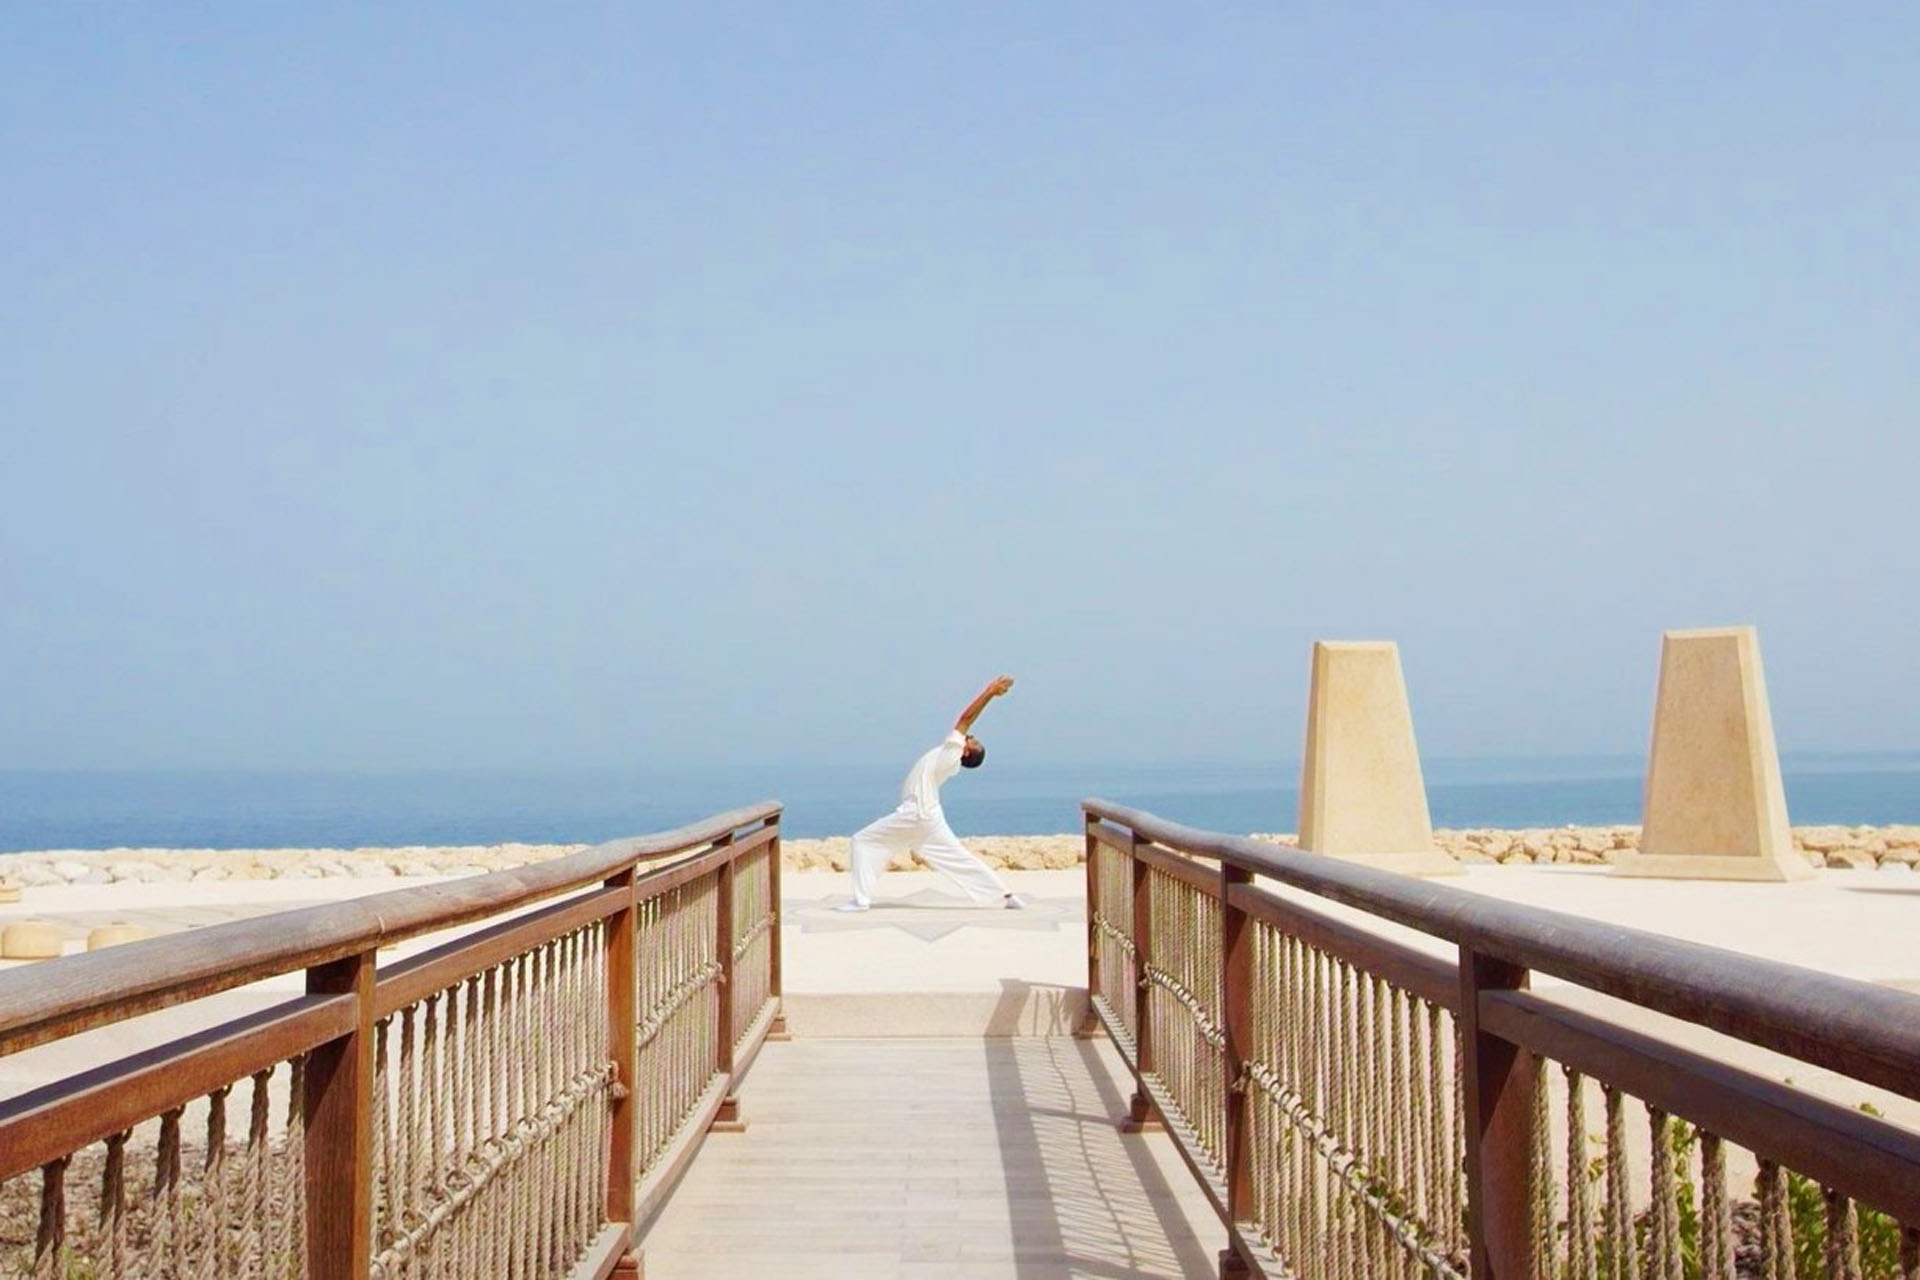 shot of bridge walkway going to beach on banana island qatar with someone doing yoga